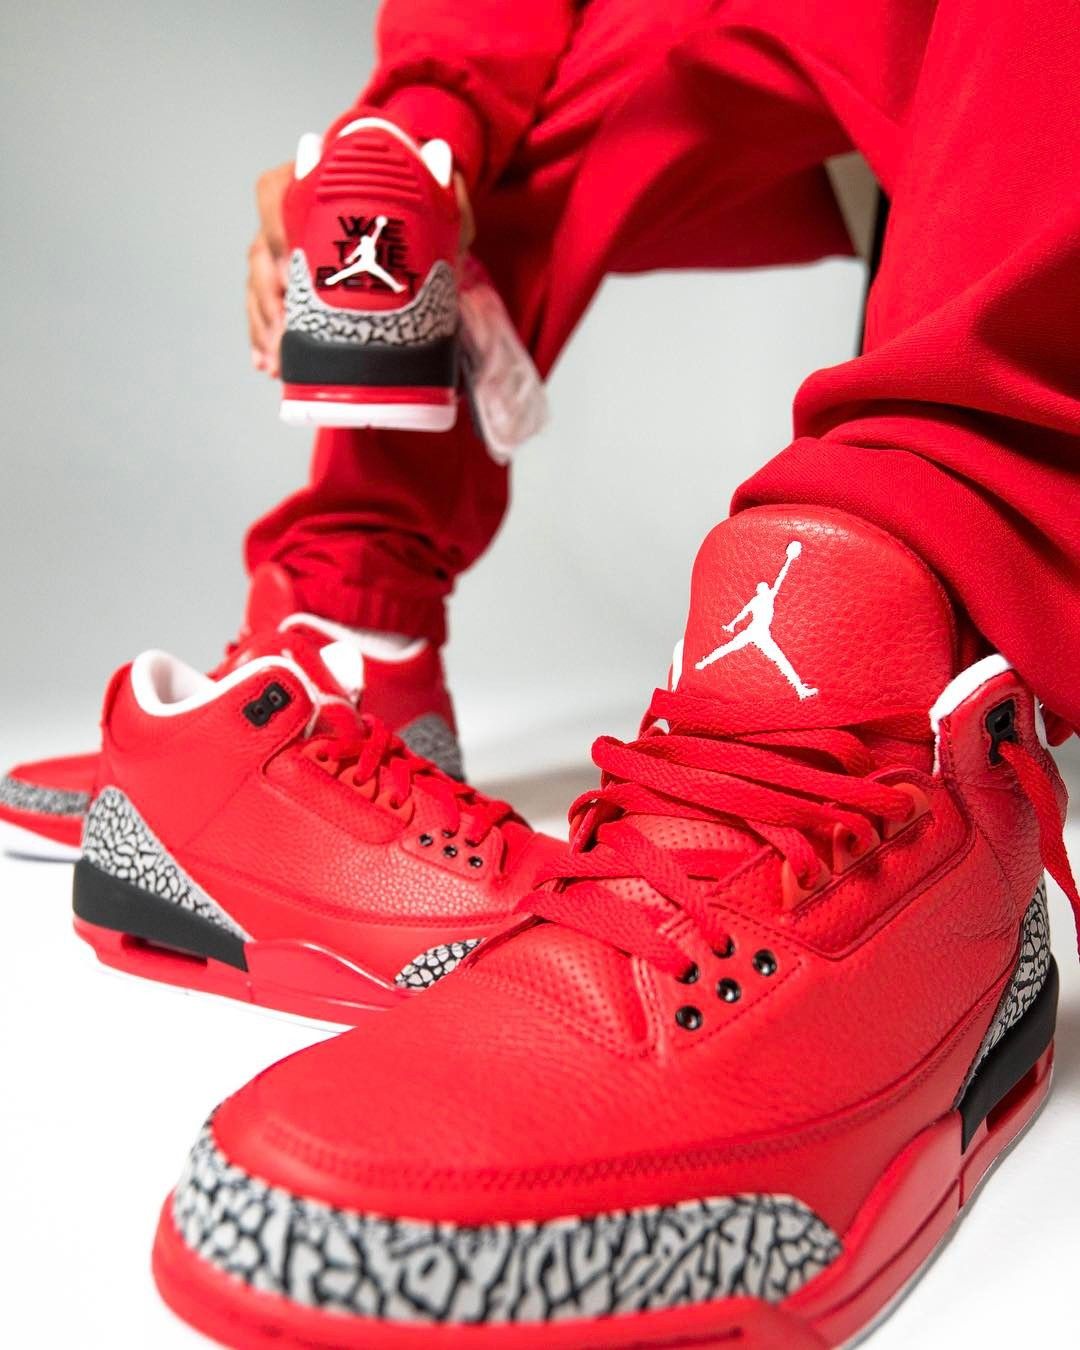 DJ Khaled Has Best Selling Jordan Sneaker Collab Of All Time